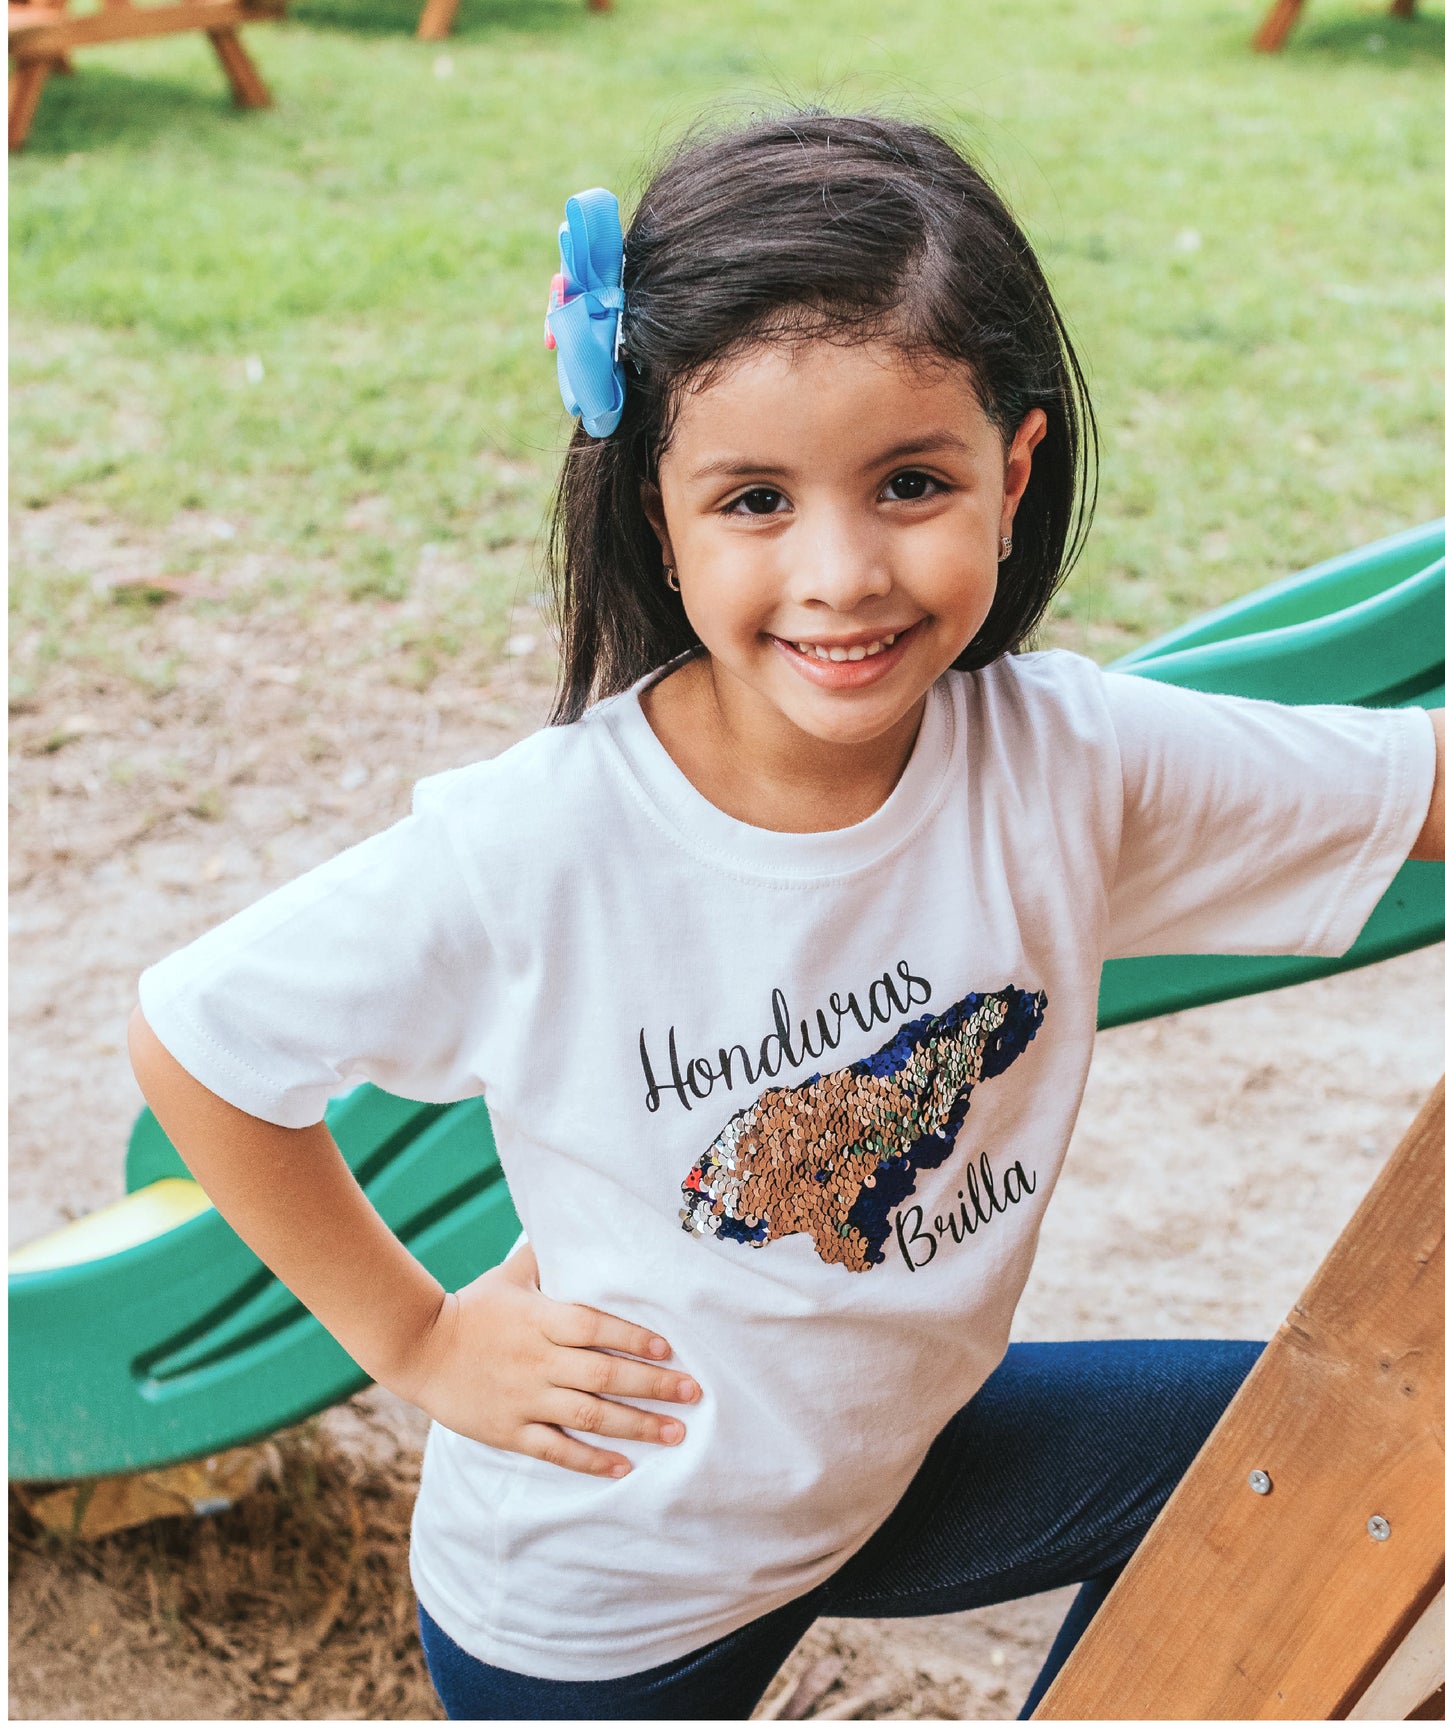 Honduras Brilla Mapa Lentejuela Reversible Camiseta Niñas